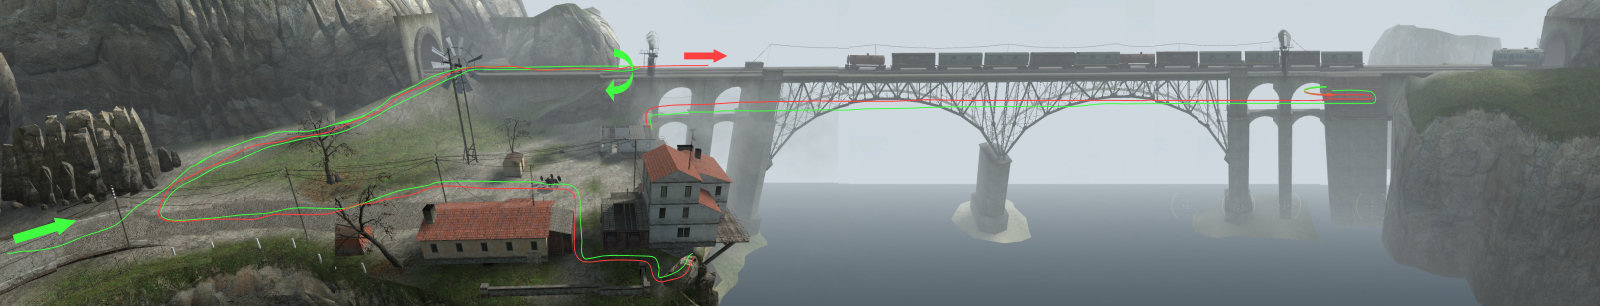 Bridge pano.jpg